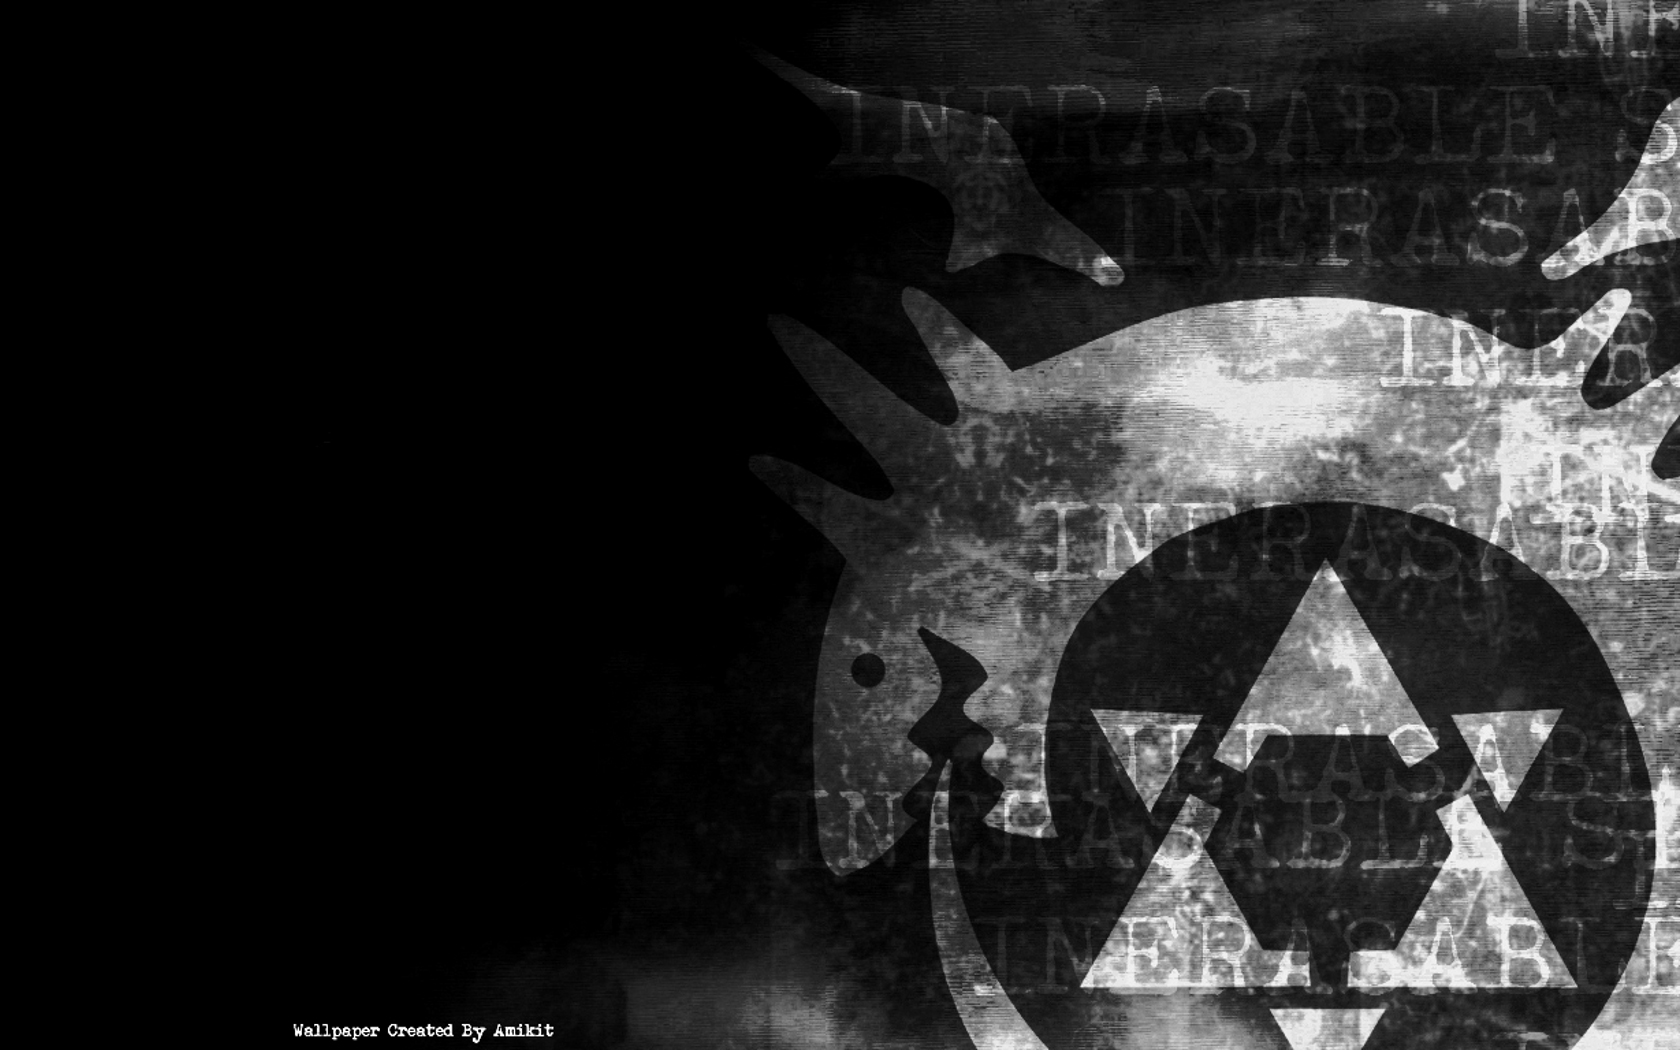 Download Fullmetal Alchemist Wallpaper